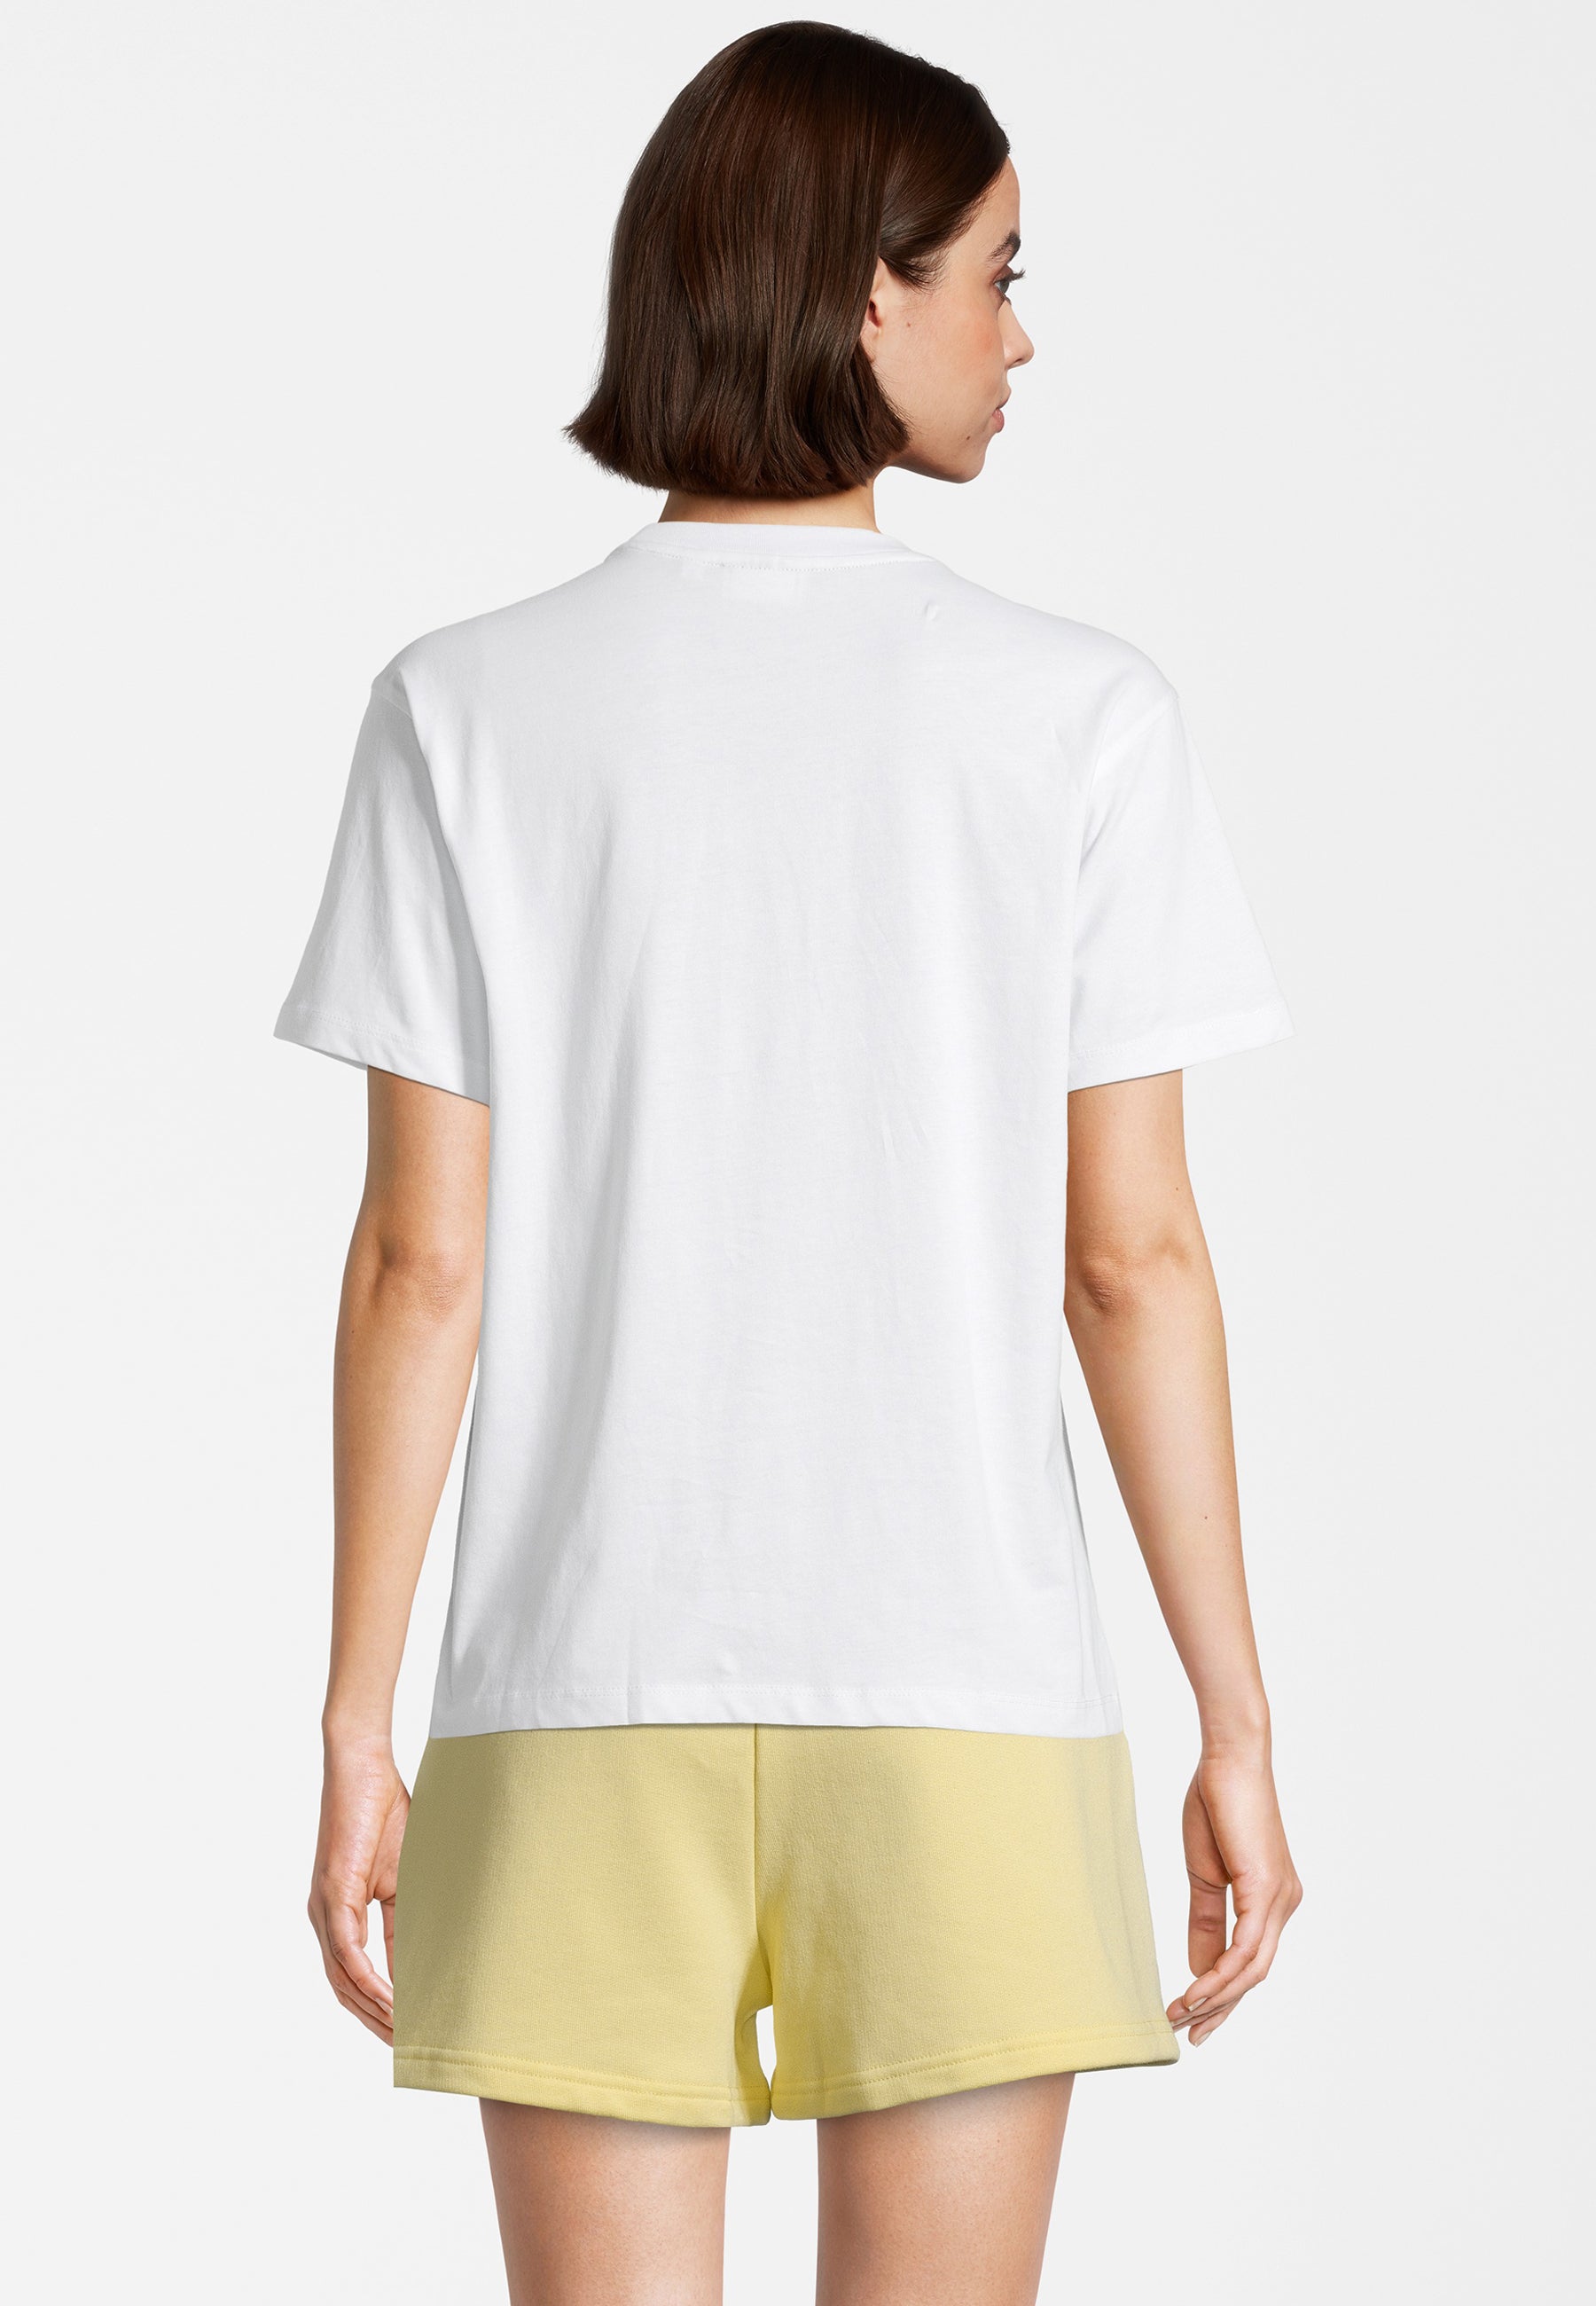 Biendorf Tee in Bright White T-Shirts Fila   